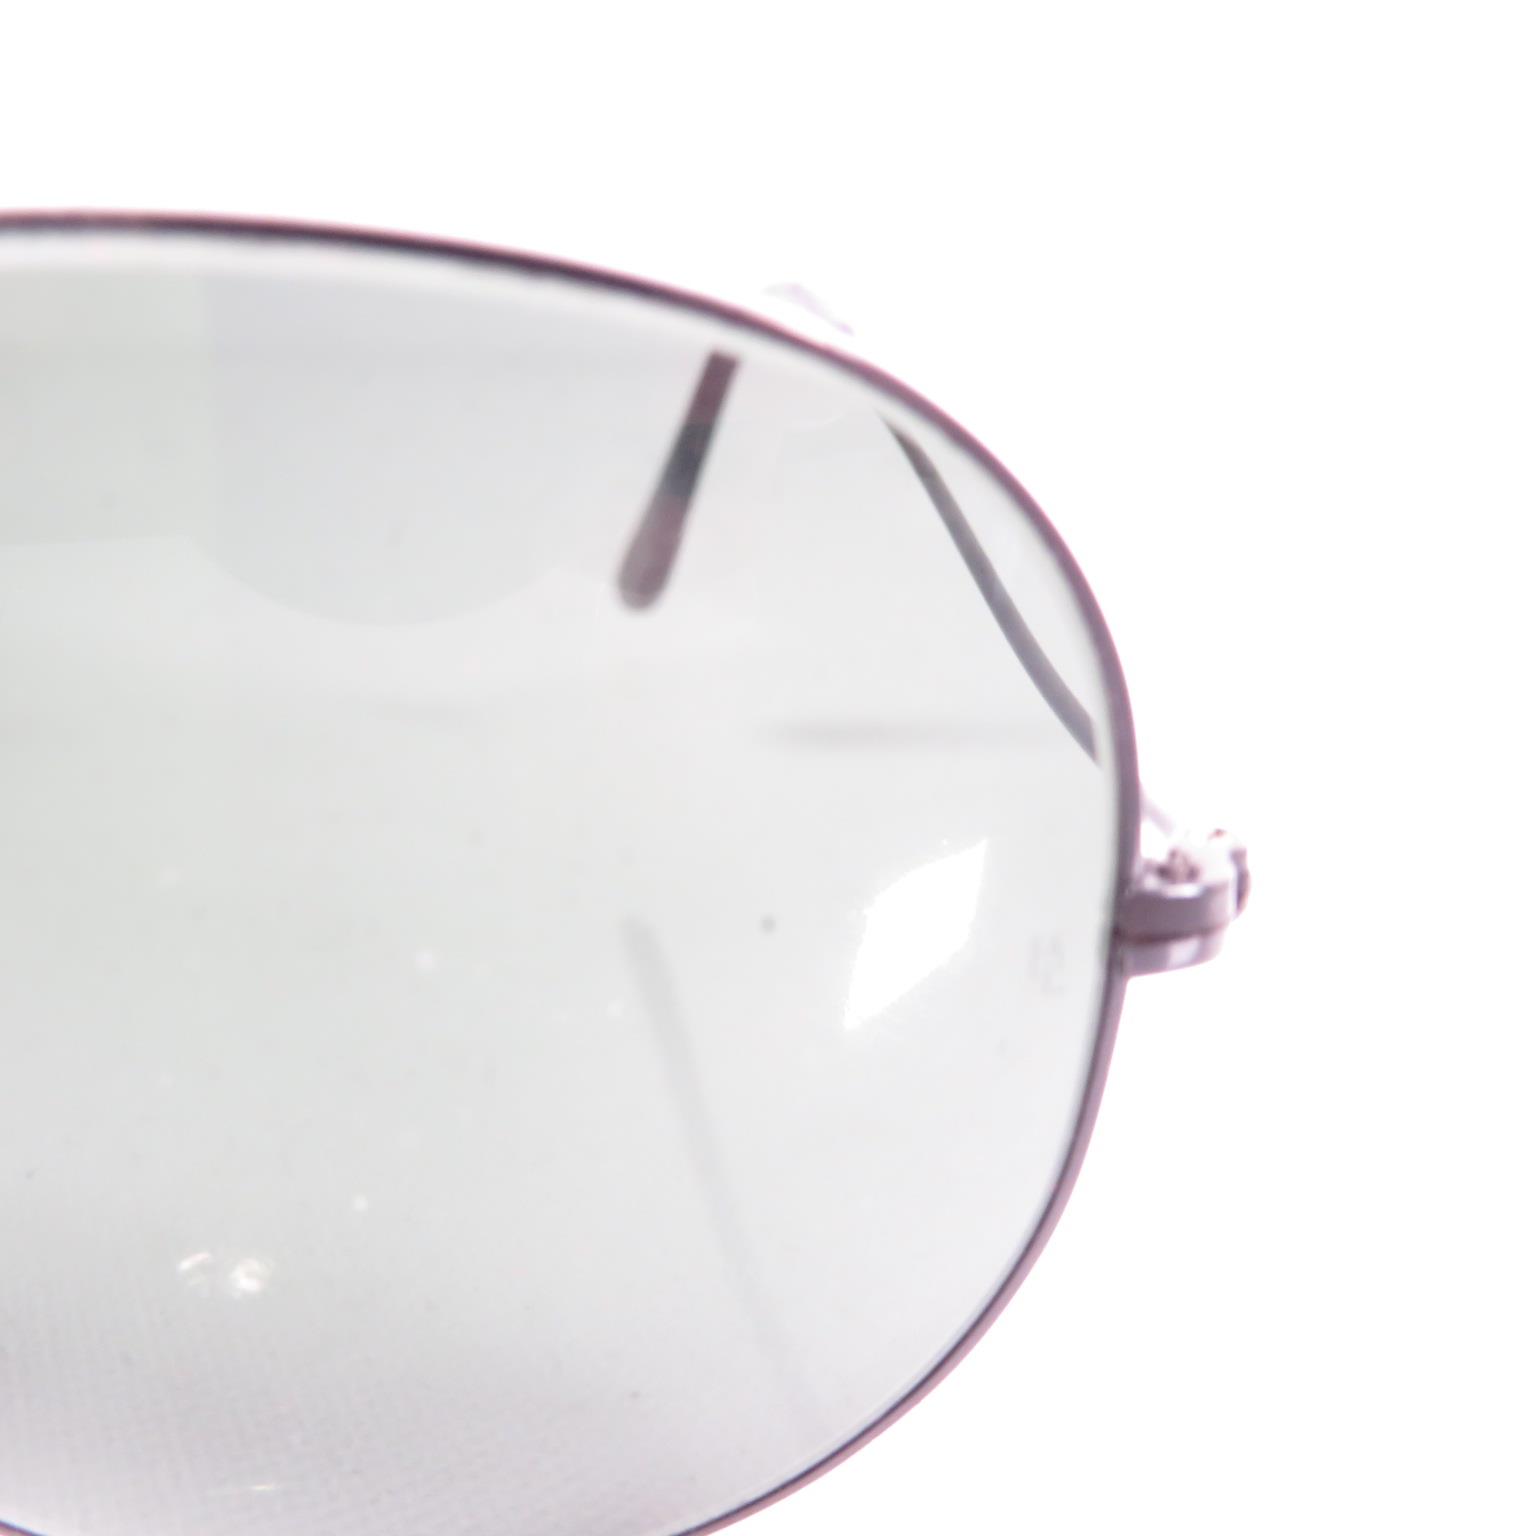 5x pairs Ray Ban sunglasses - - Image 4 of 24